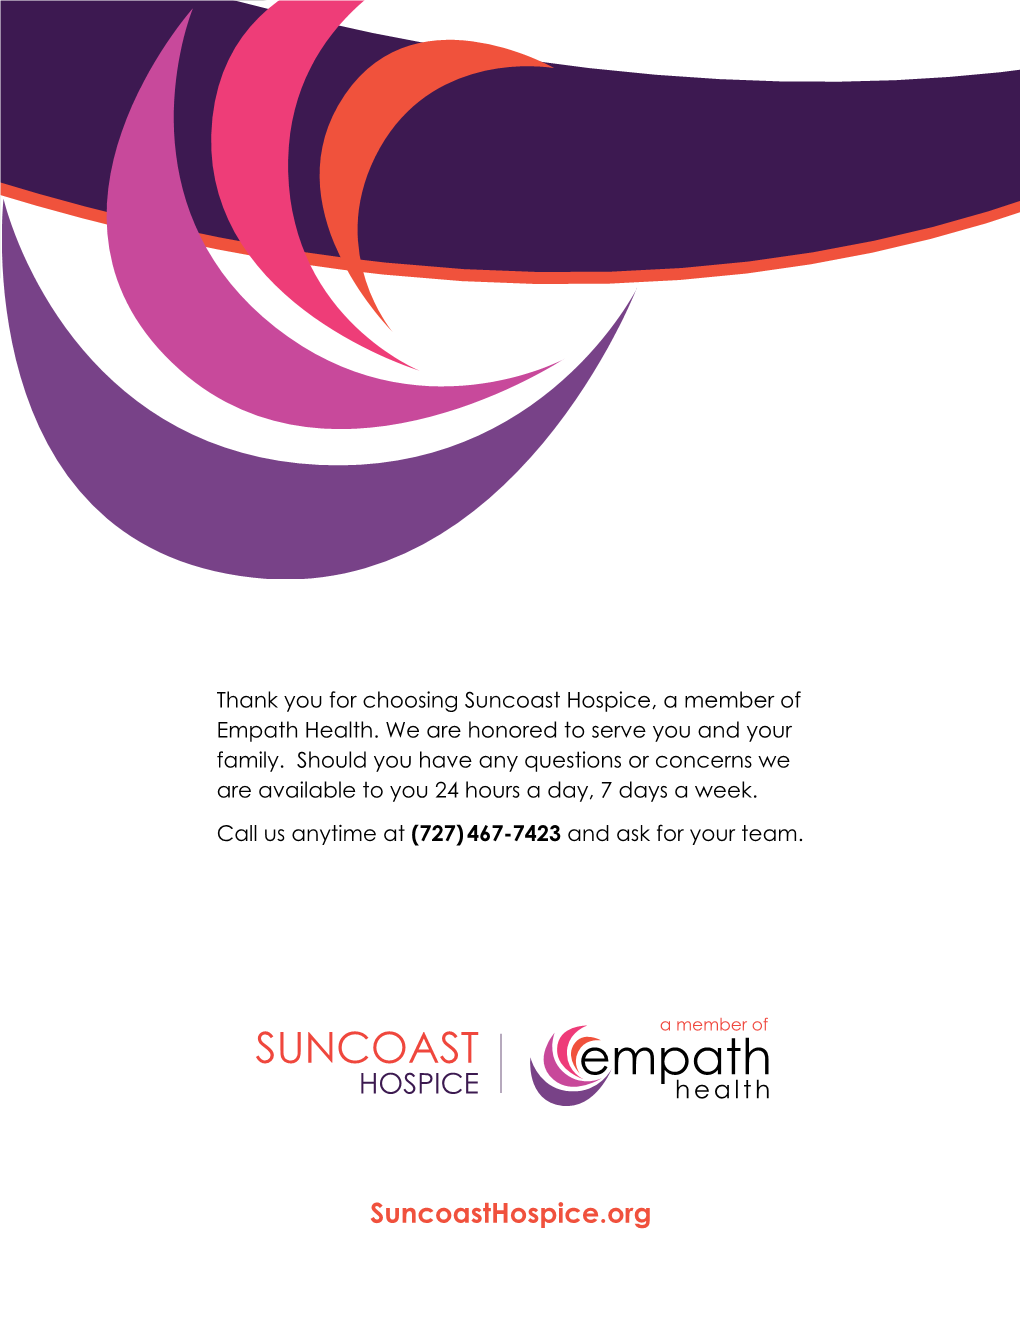 Suncoast Hospice, a Member of Empath Health